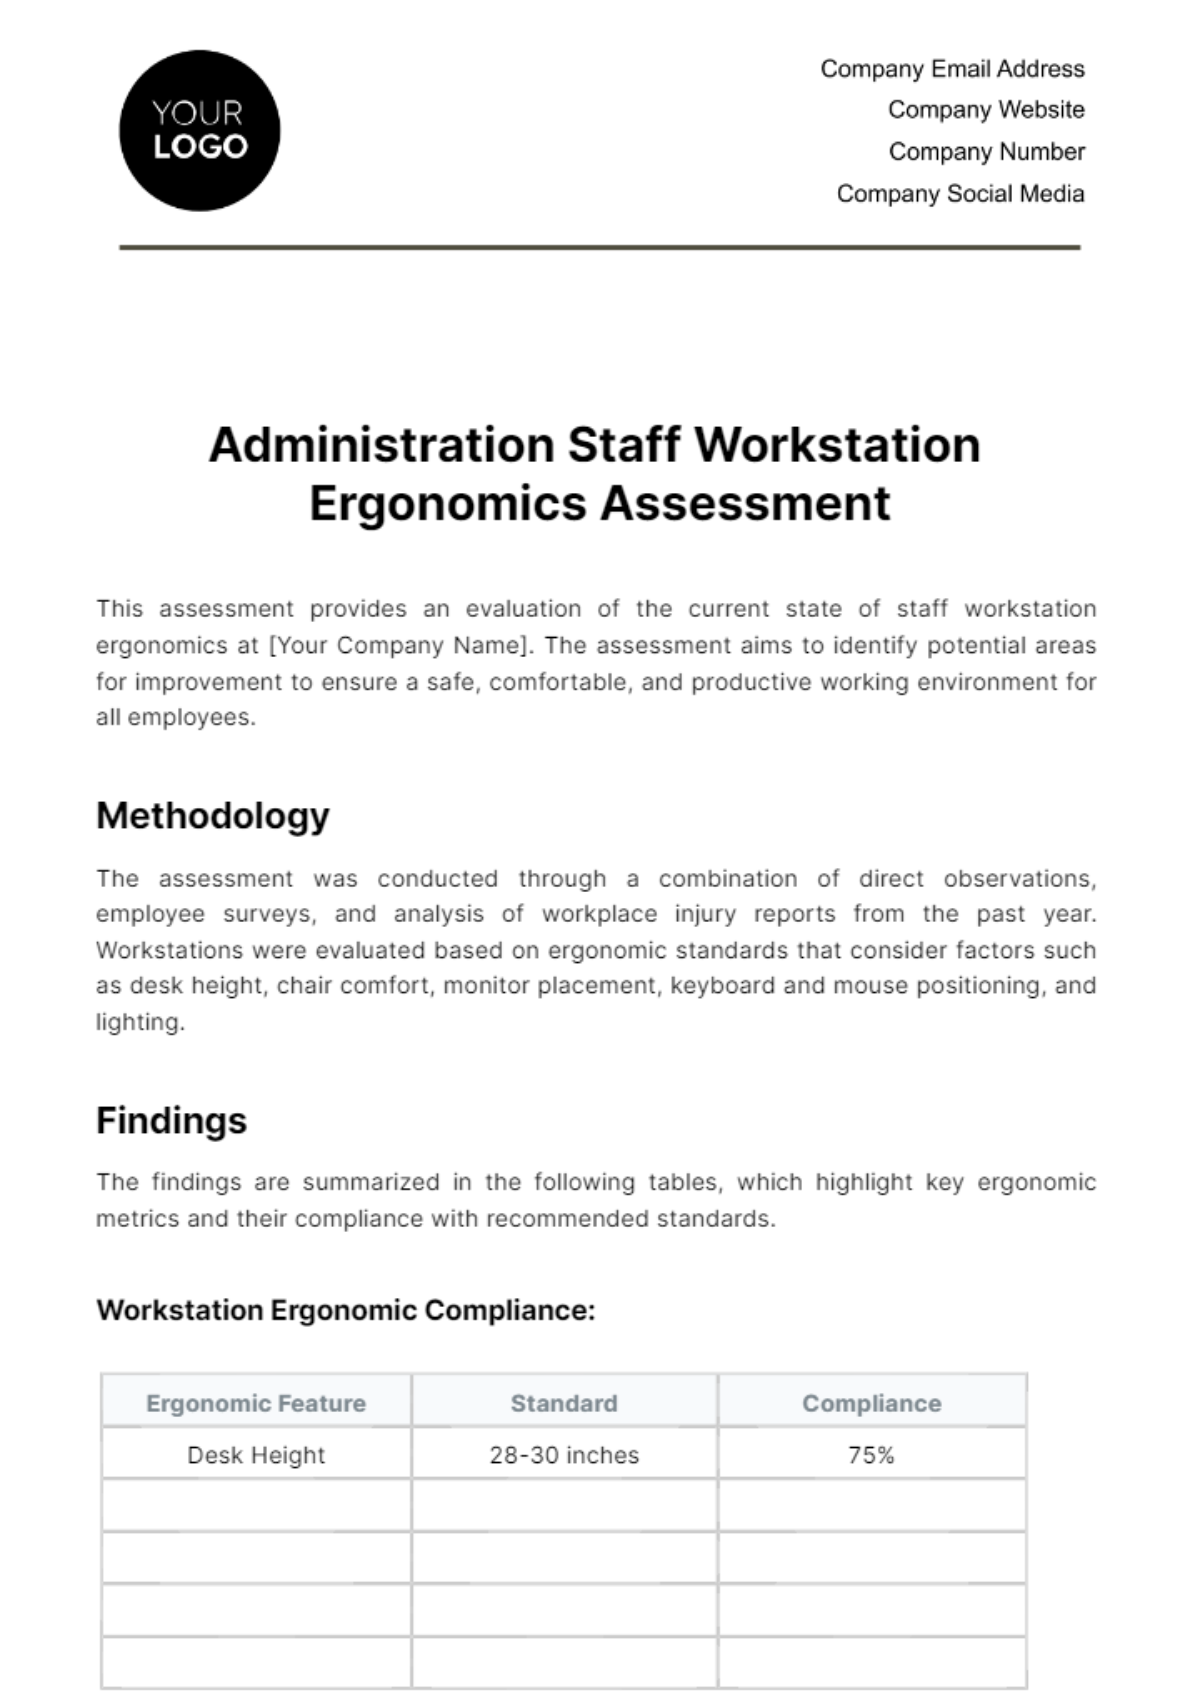 Administration Staff Workstation Ergonomics Assessment Template